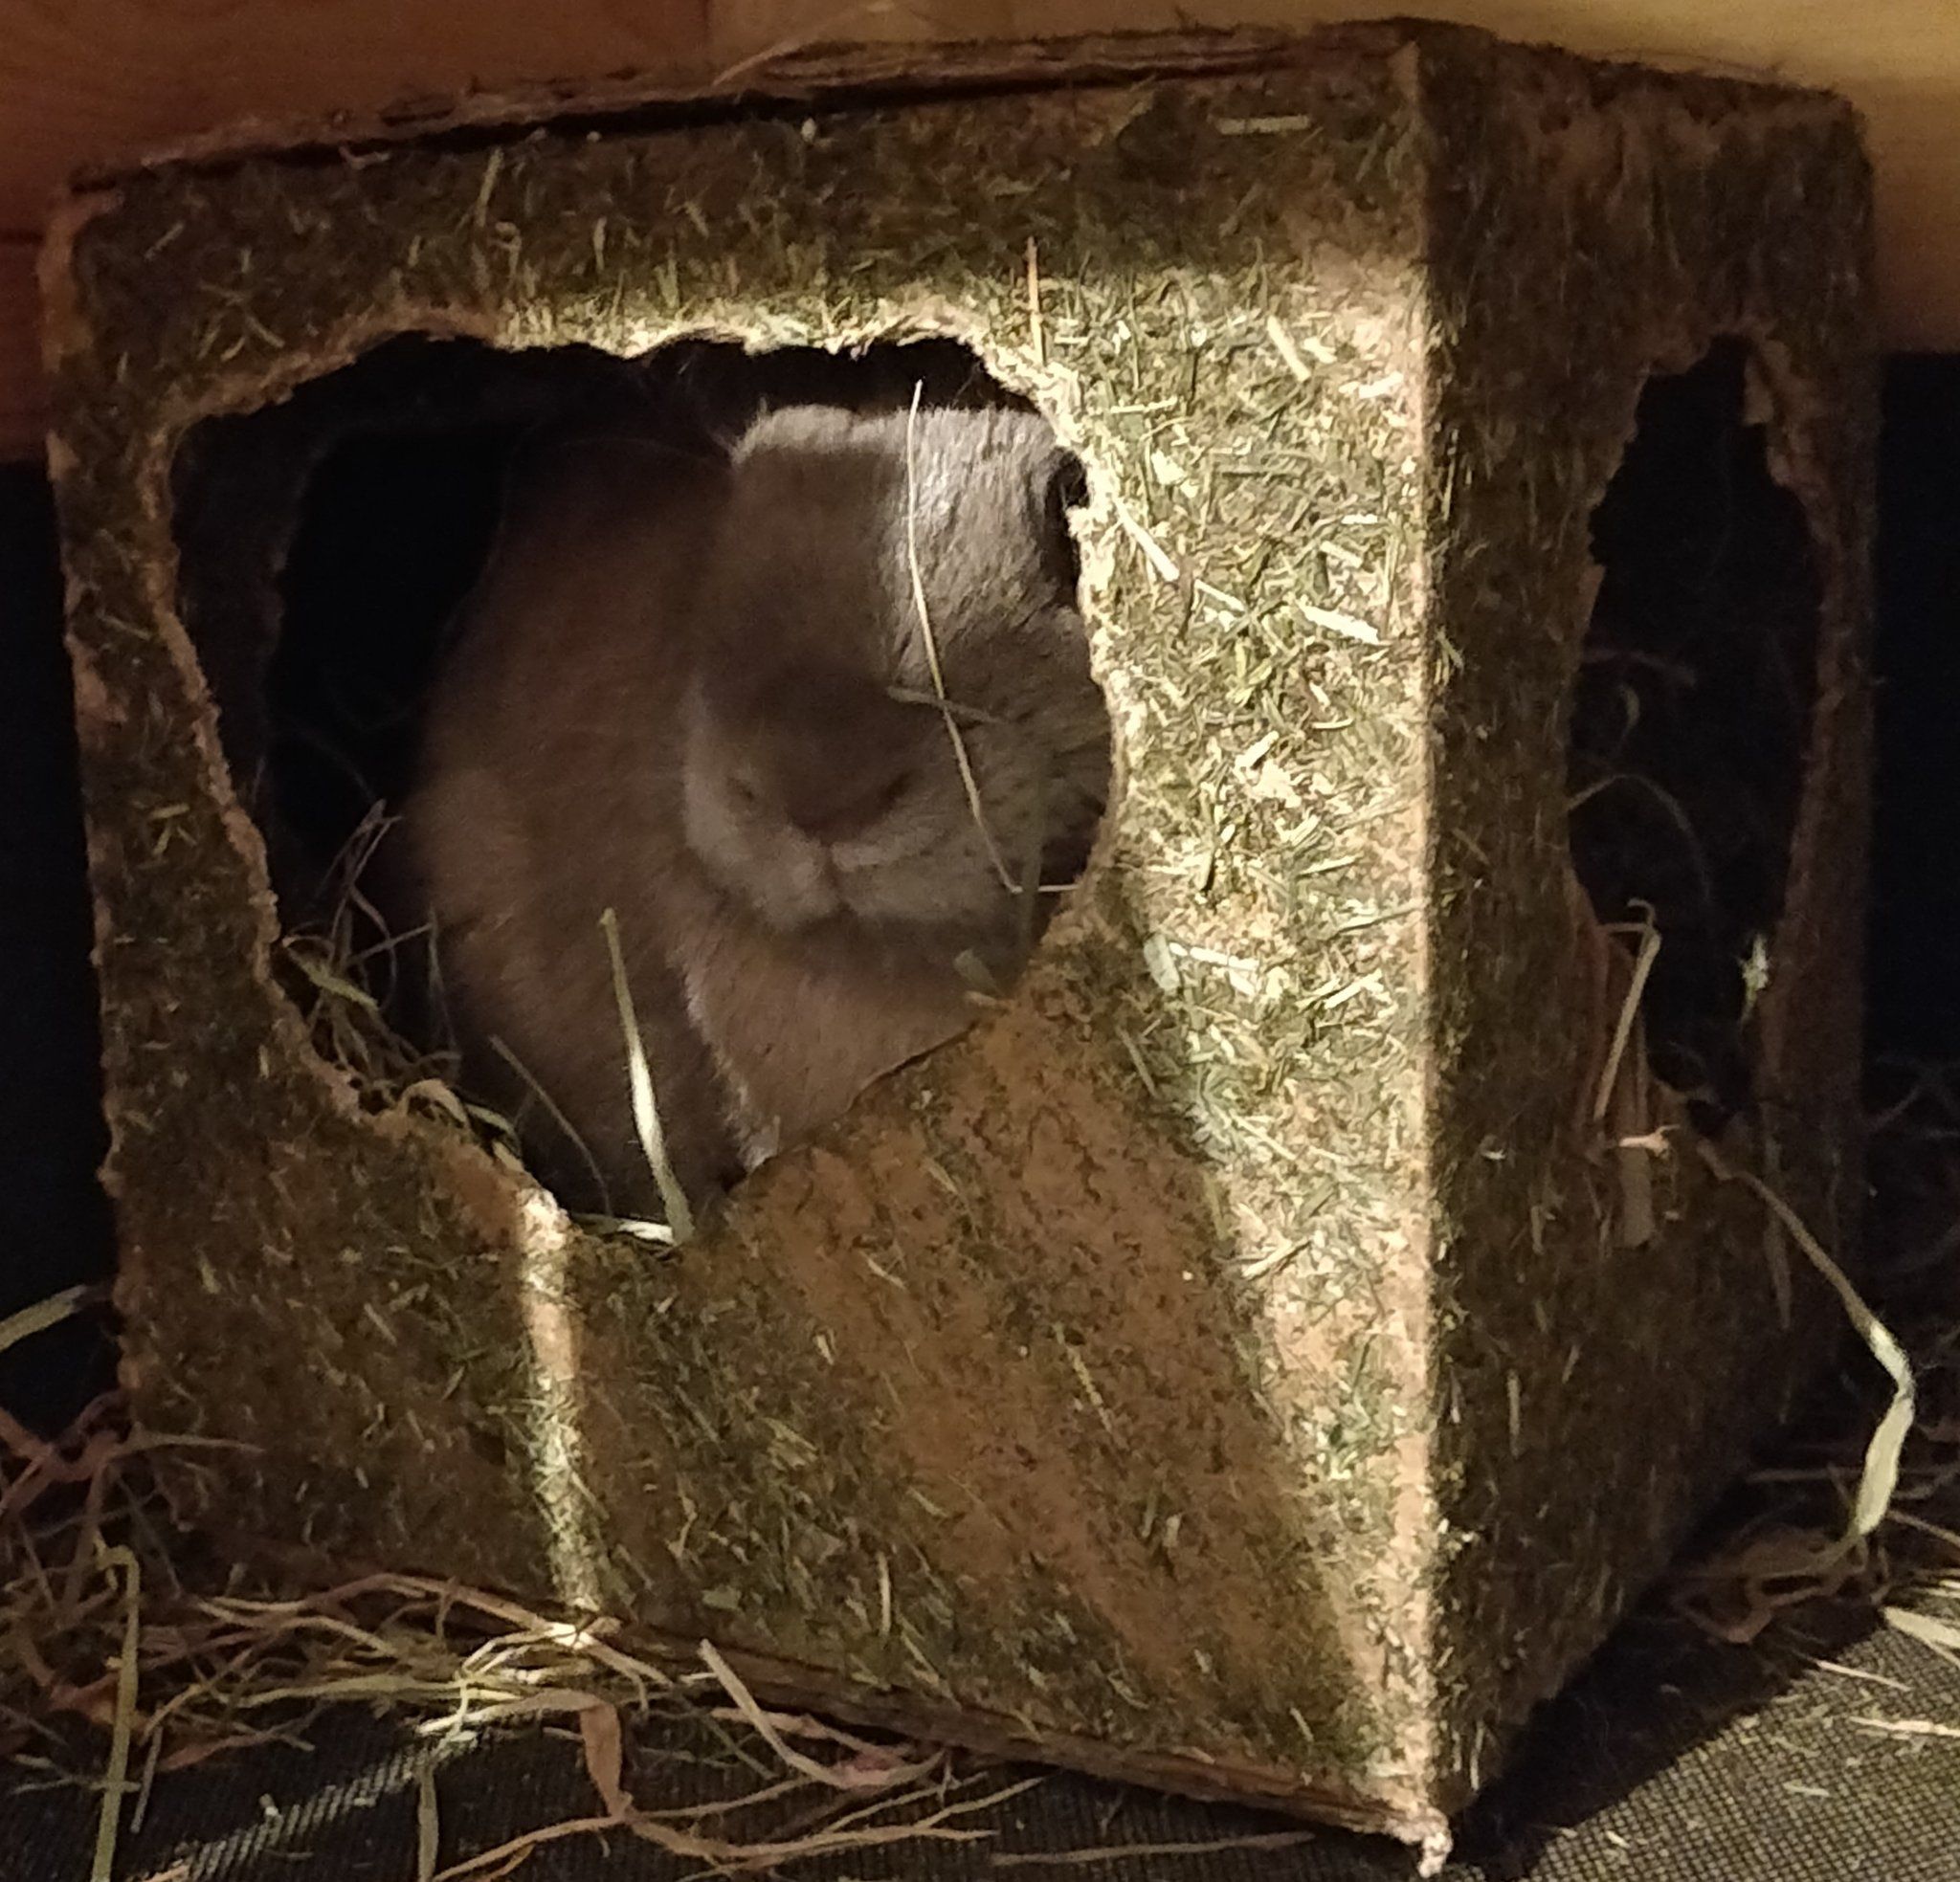 Bunny in a box